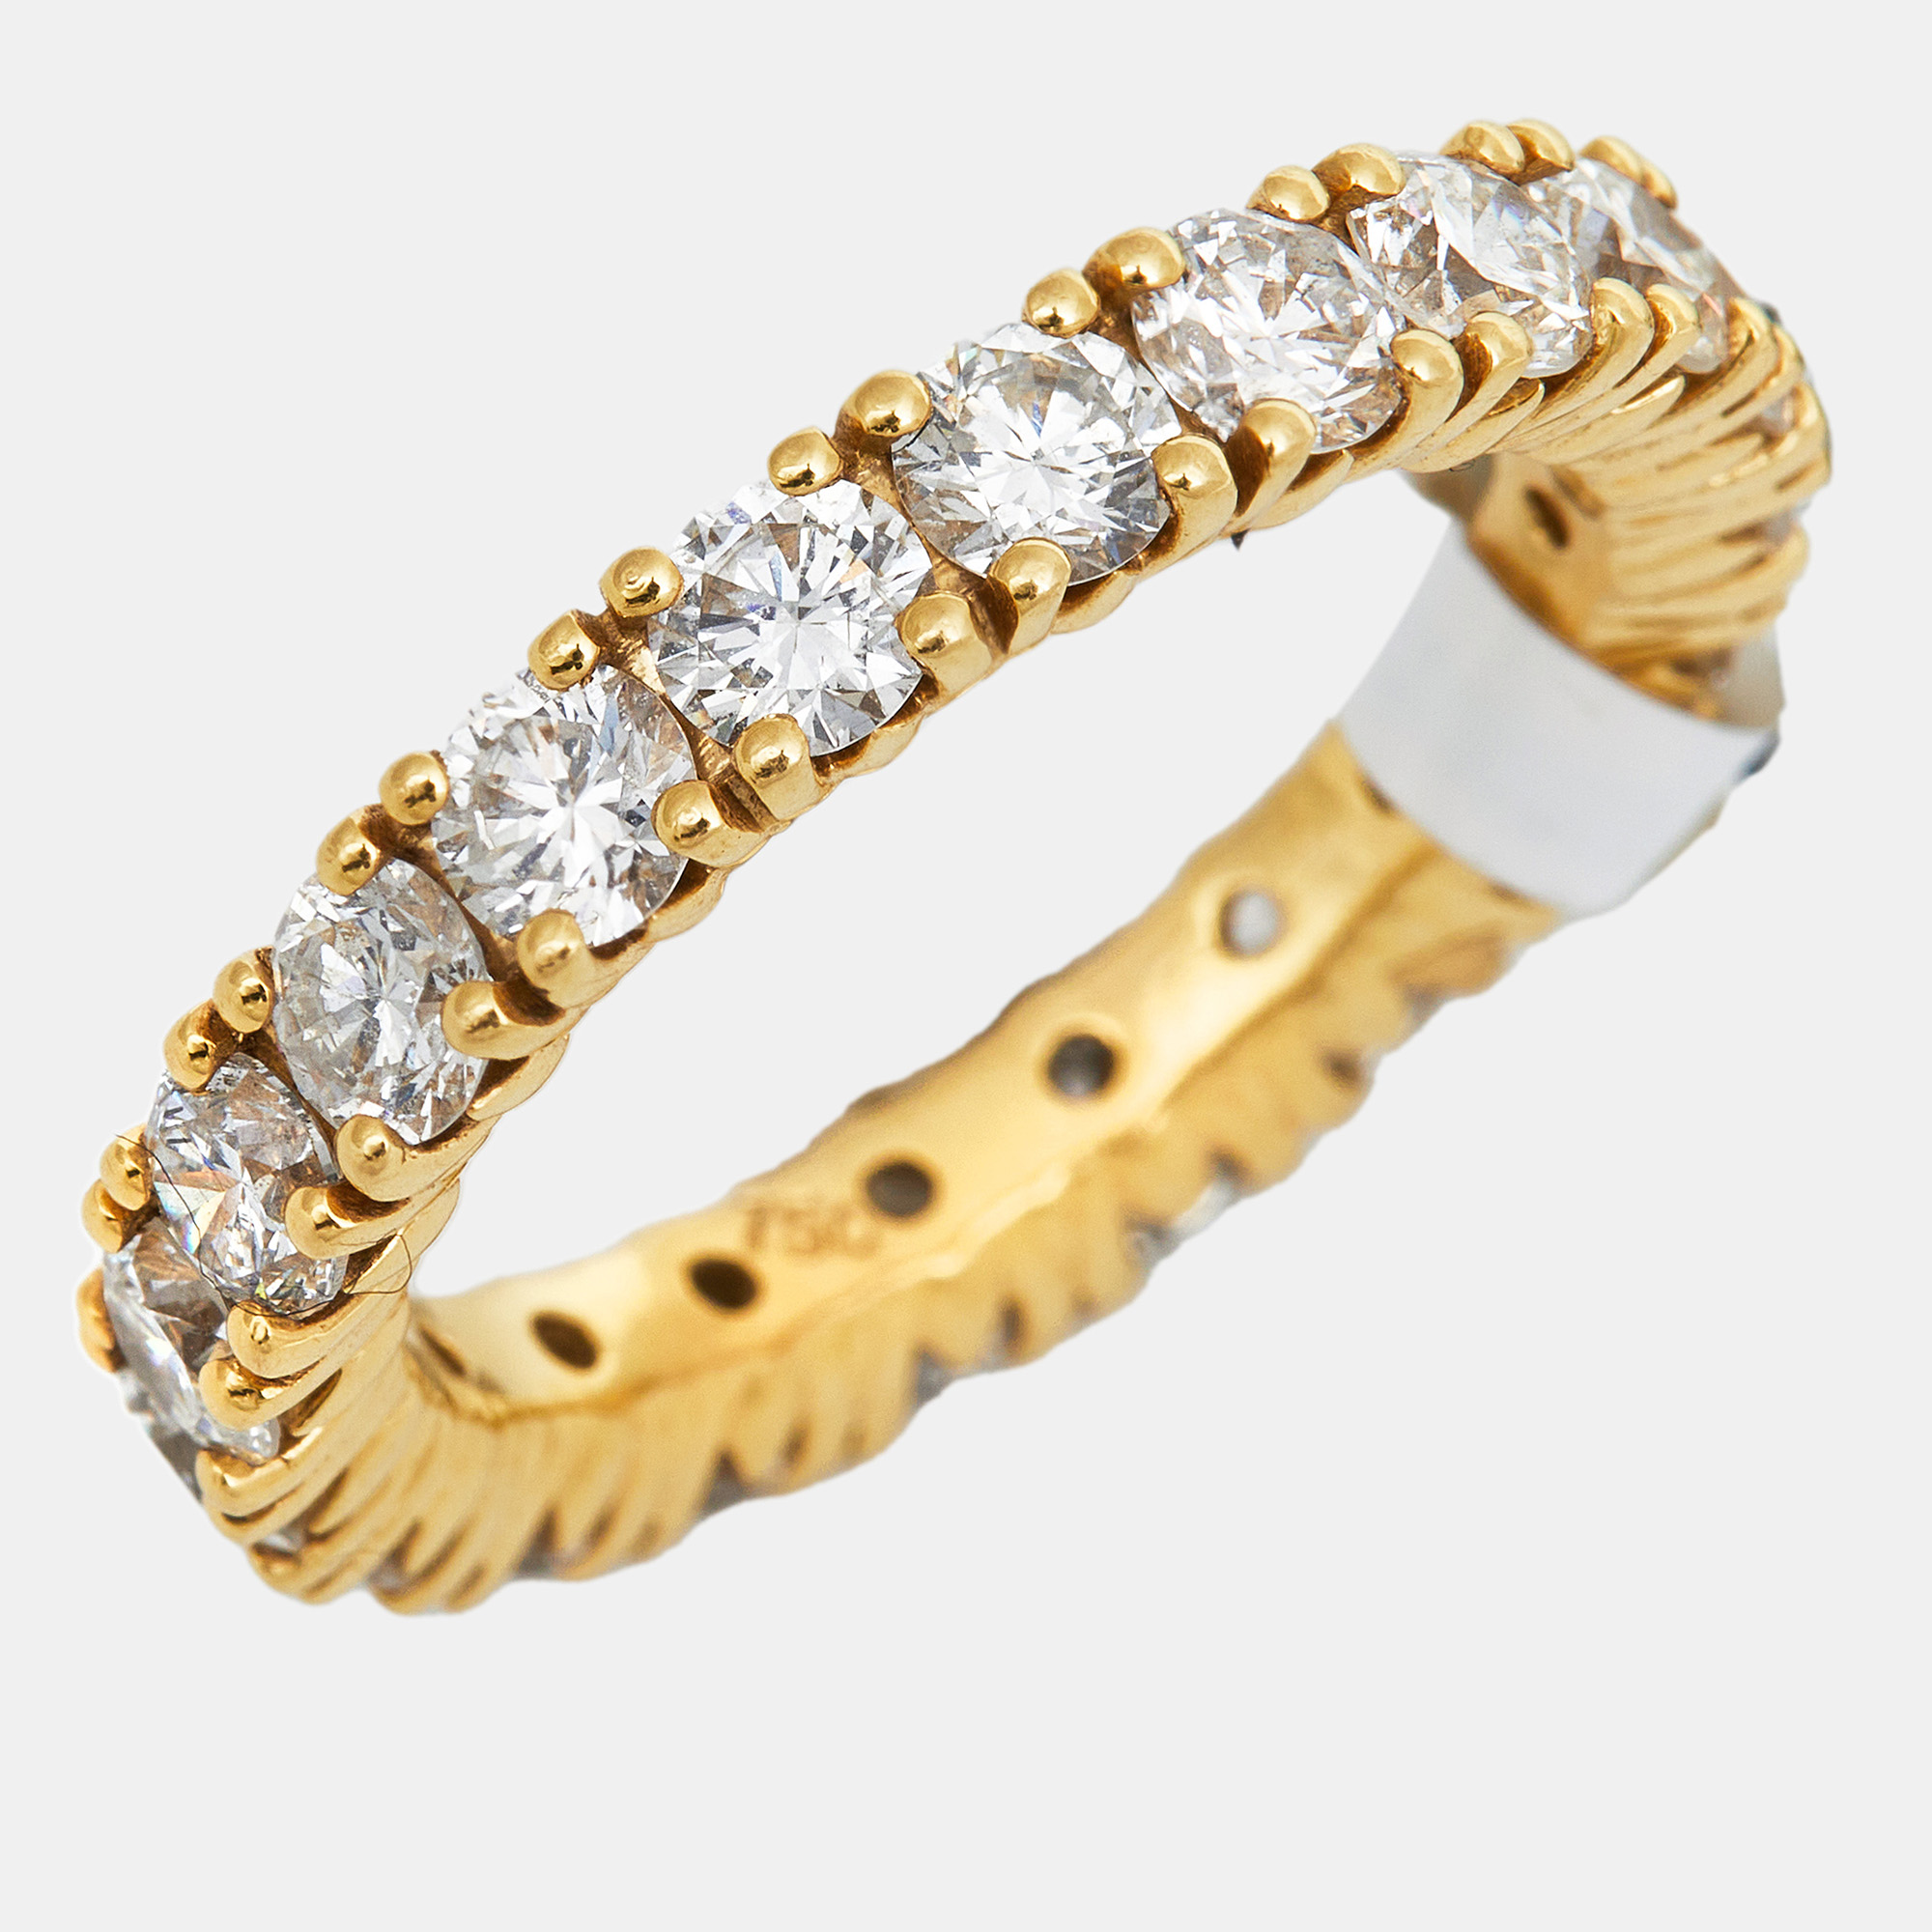 The diamond edit 18k yellow gold ring eu 53